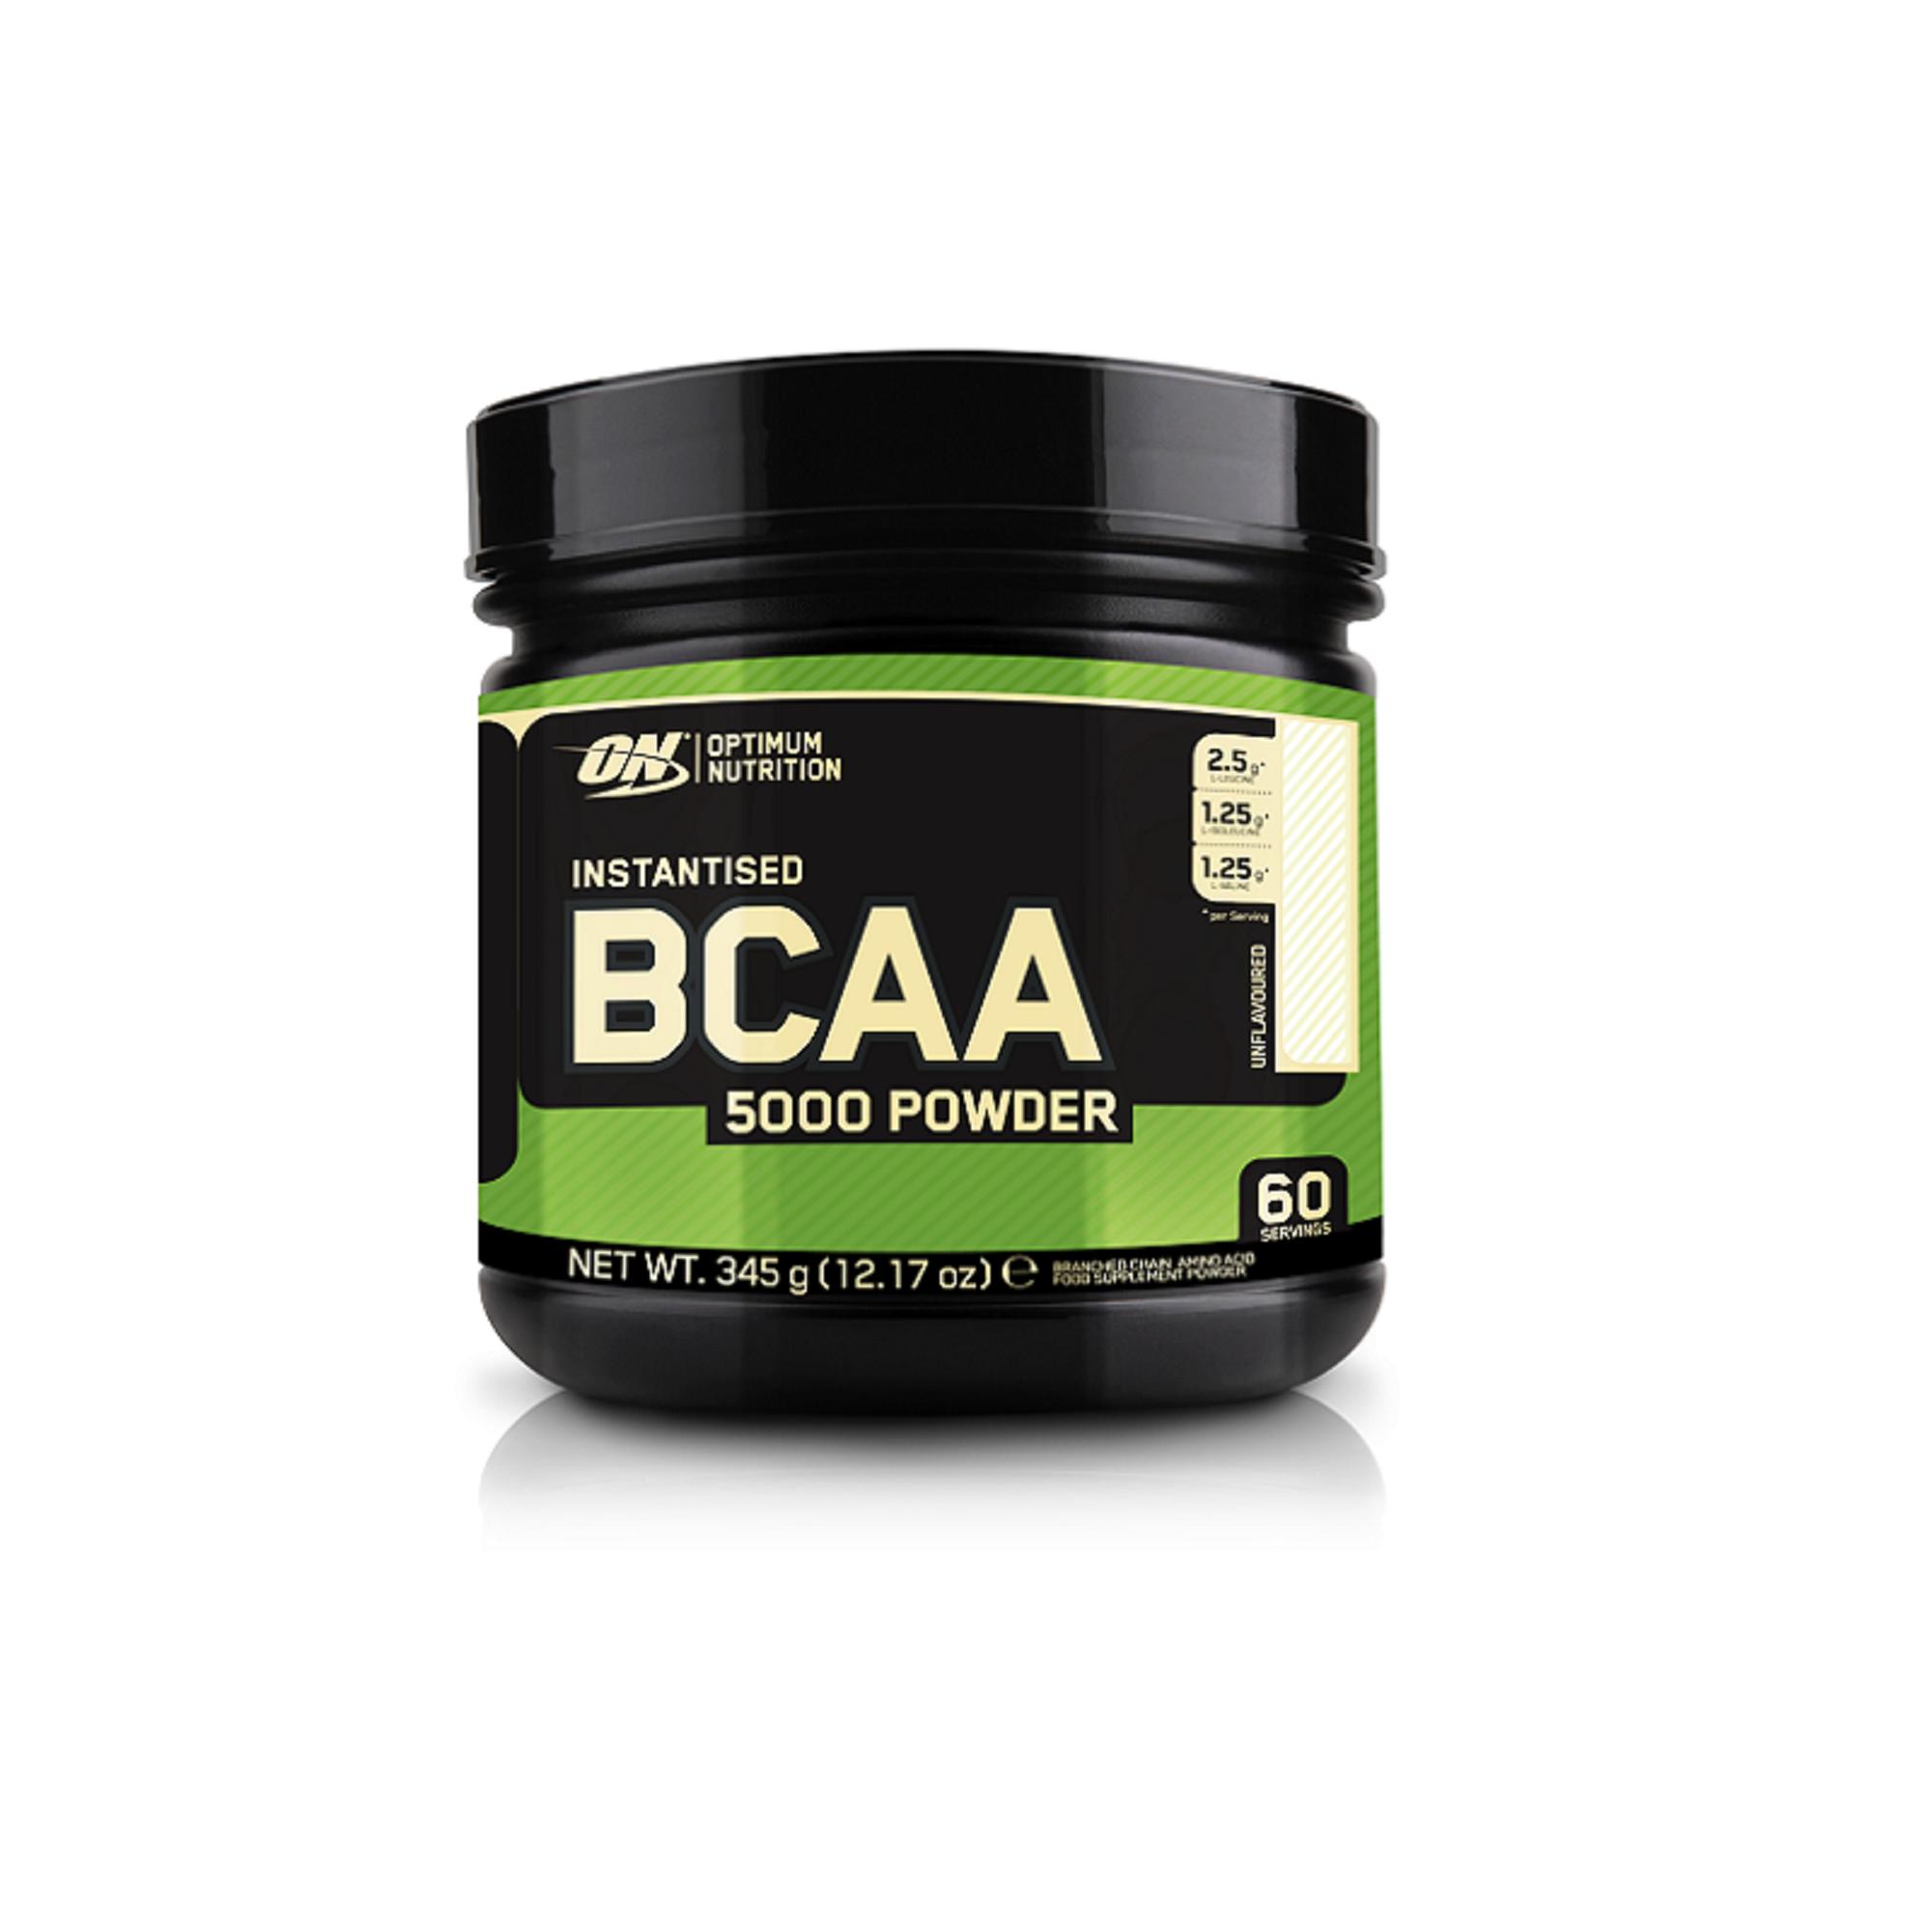 Аминокислоты nutrition. ВСАА Optimum Nutrition. БЦАА Optimum Nutrition. BCAA Optimum Nutrition. BCAA Optimum Nutrition BCAA Powder.